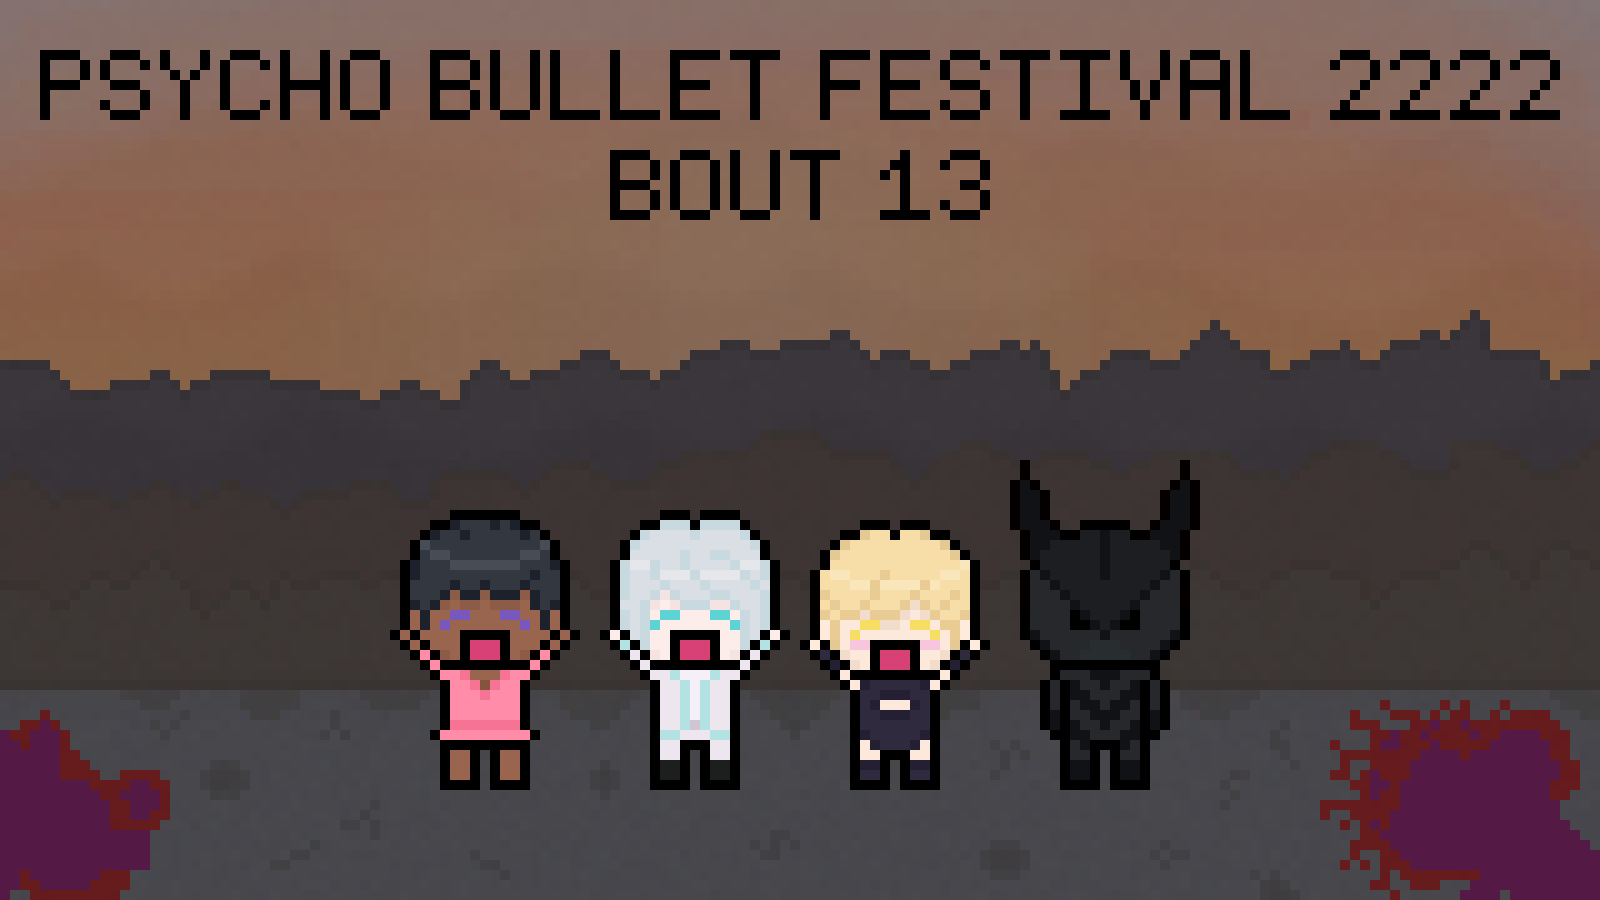 psycho-bullet-festival-2222-ch-13.png